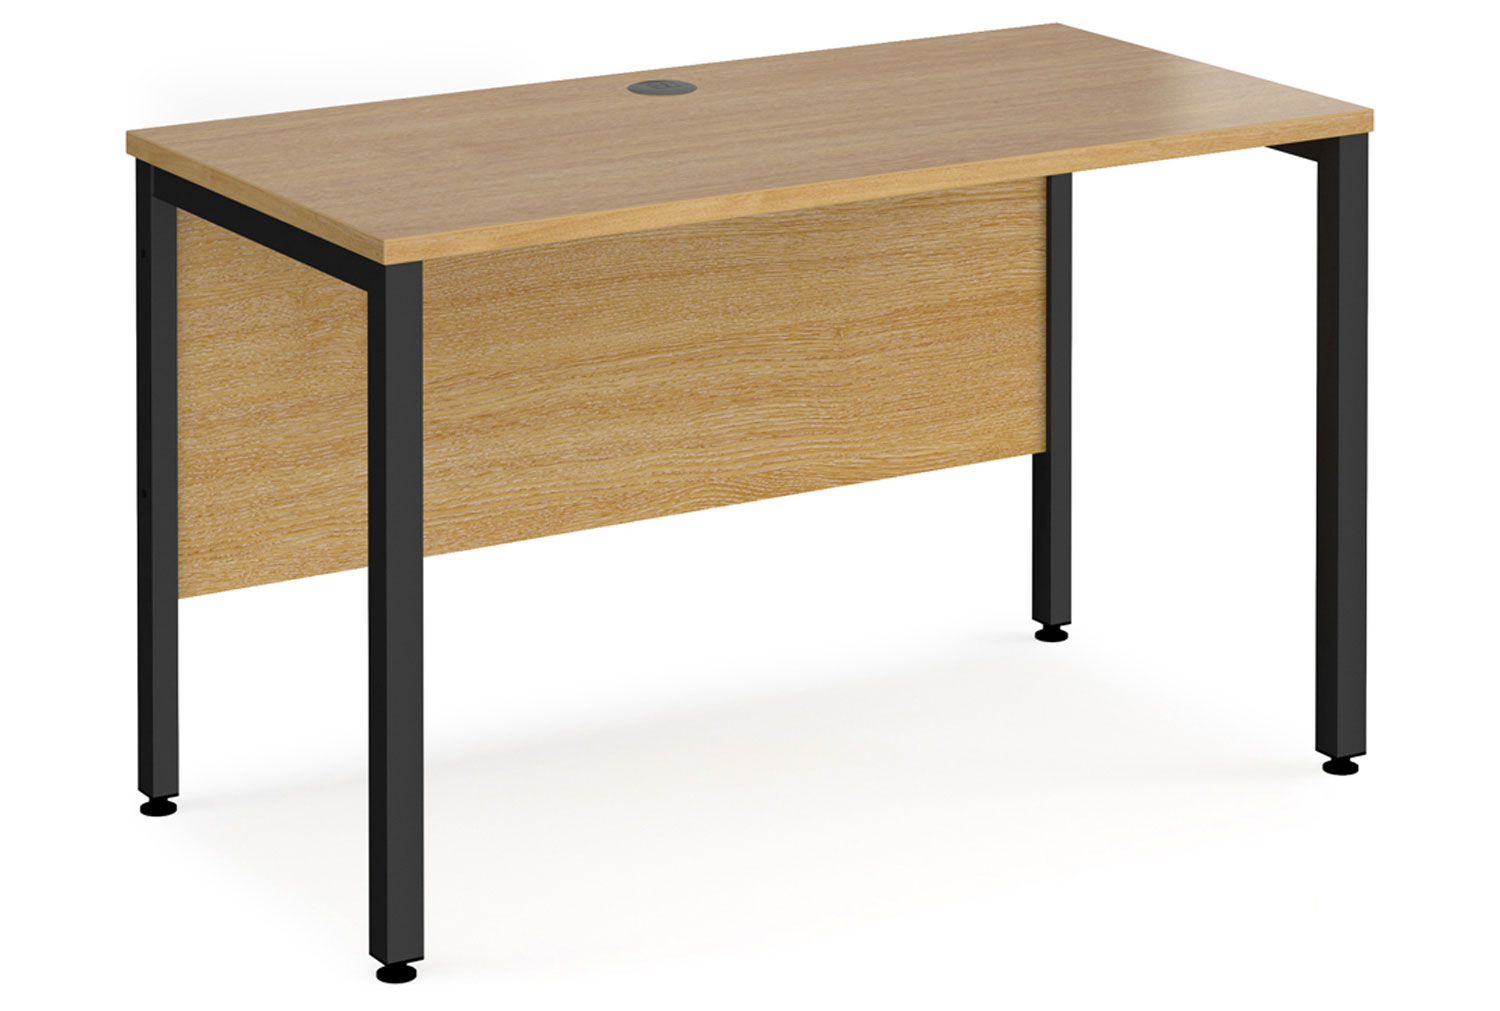 Value Line Deluxe Bench Narrow Rectangular Office Desks (Black Legs), 120w60dx73h (cm), Oak